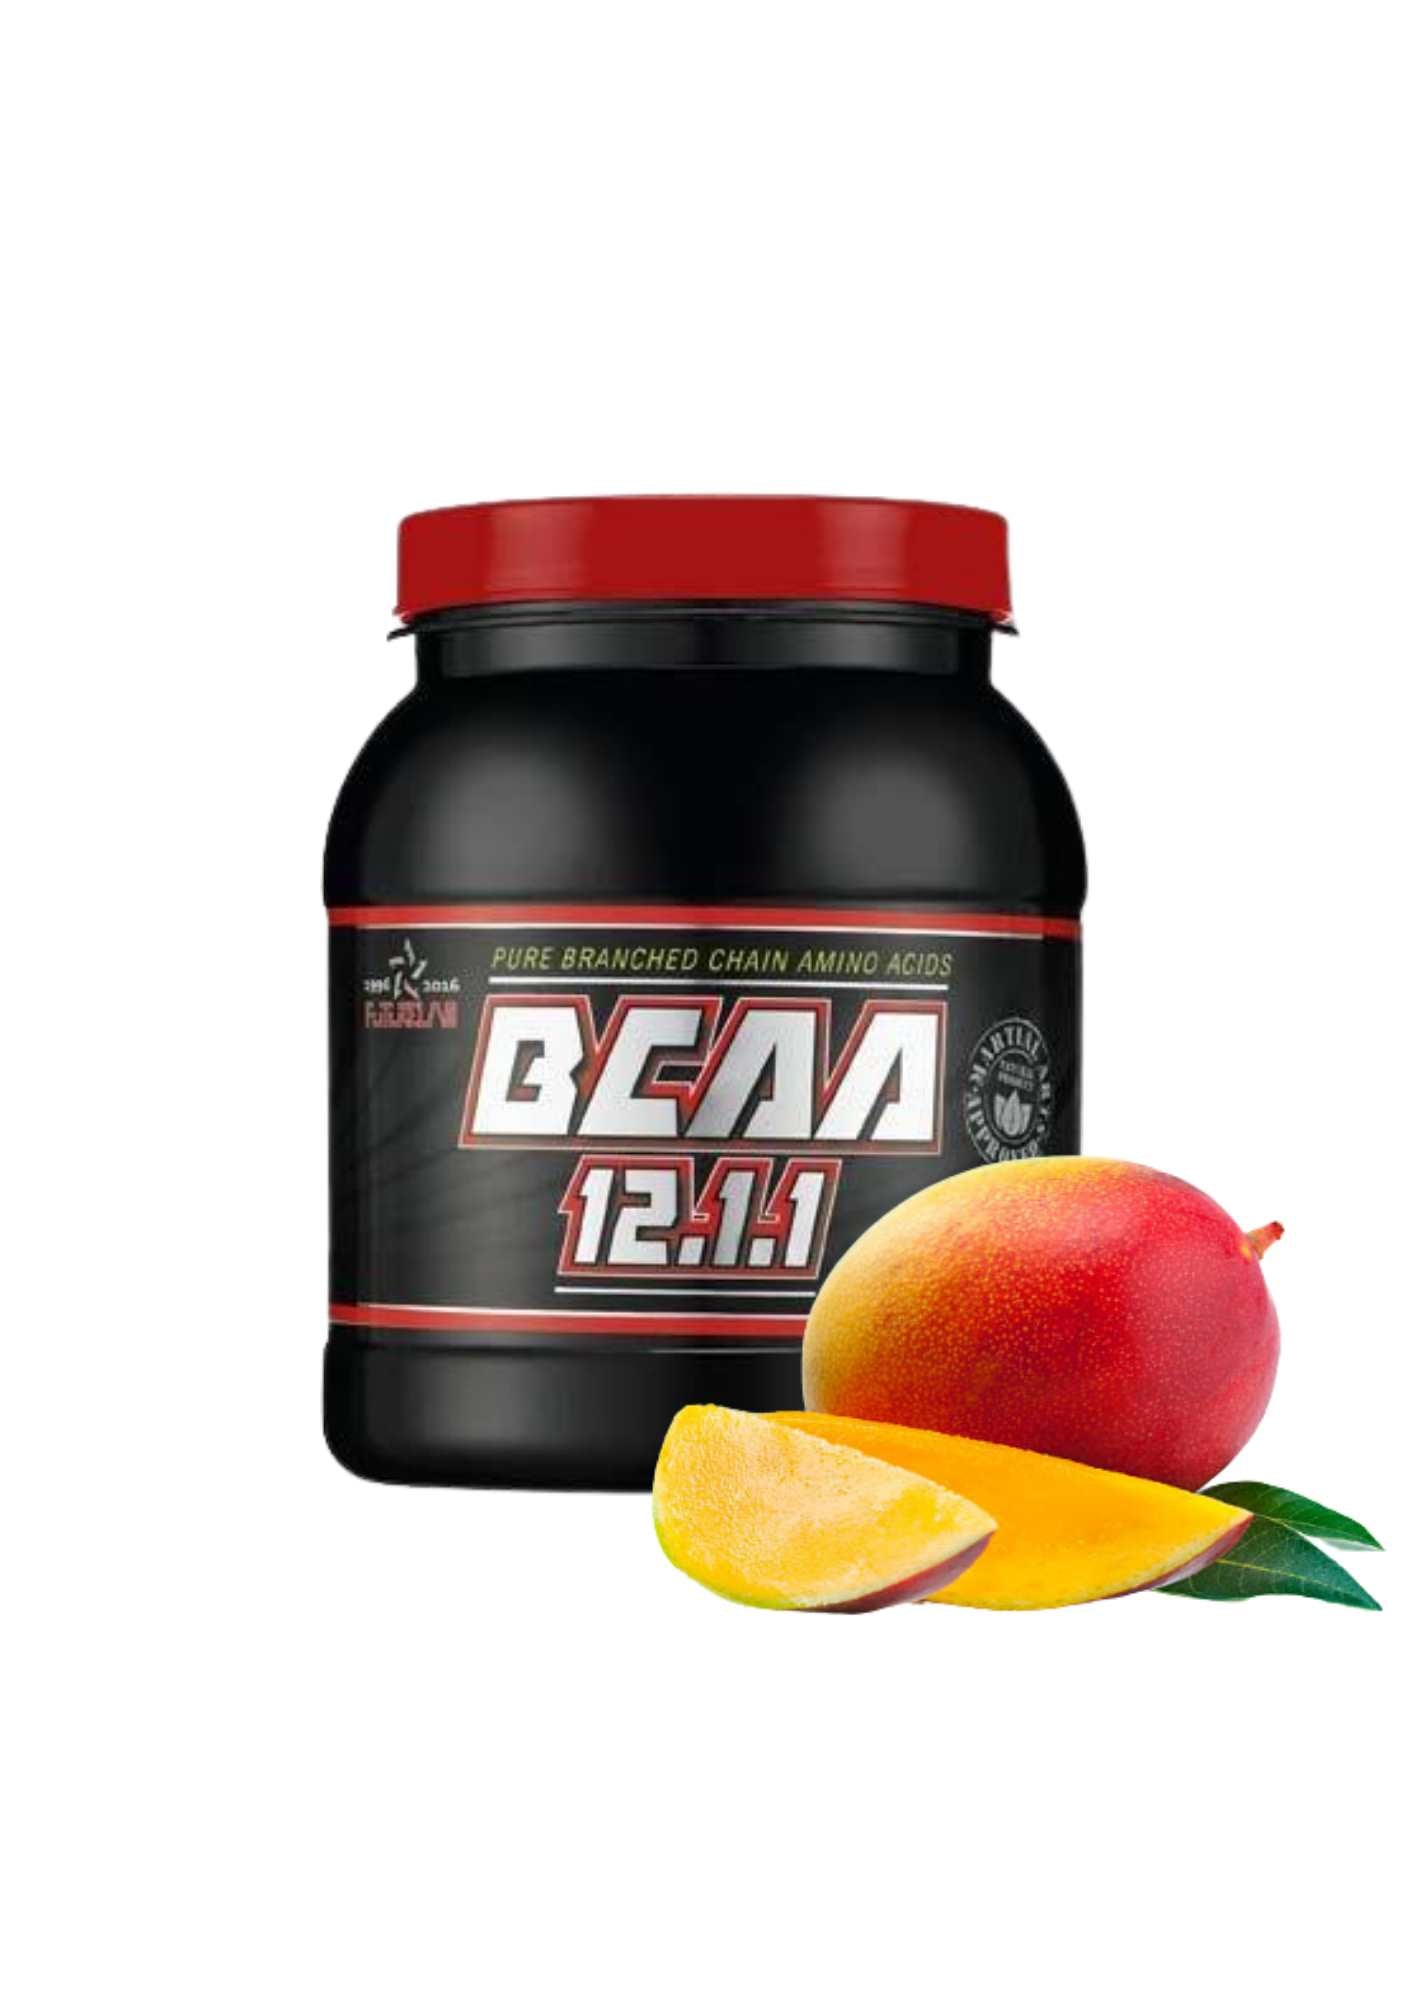 commandant costaud BCAA 12 1 1 acides aminés essentiels 100% purs futurelab 360g goût mangue délicieux pot